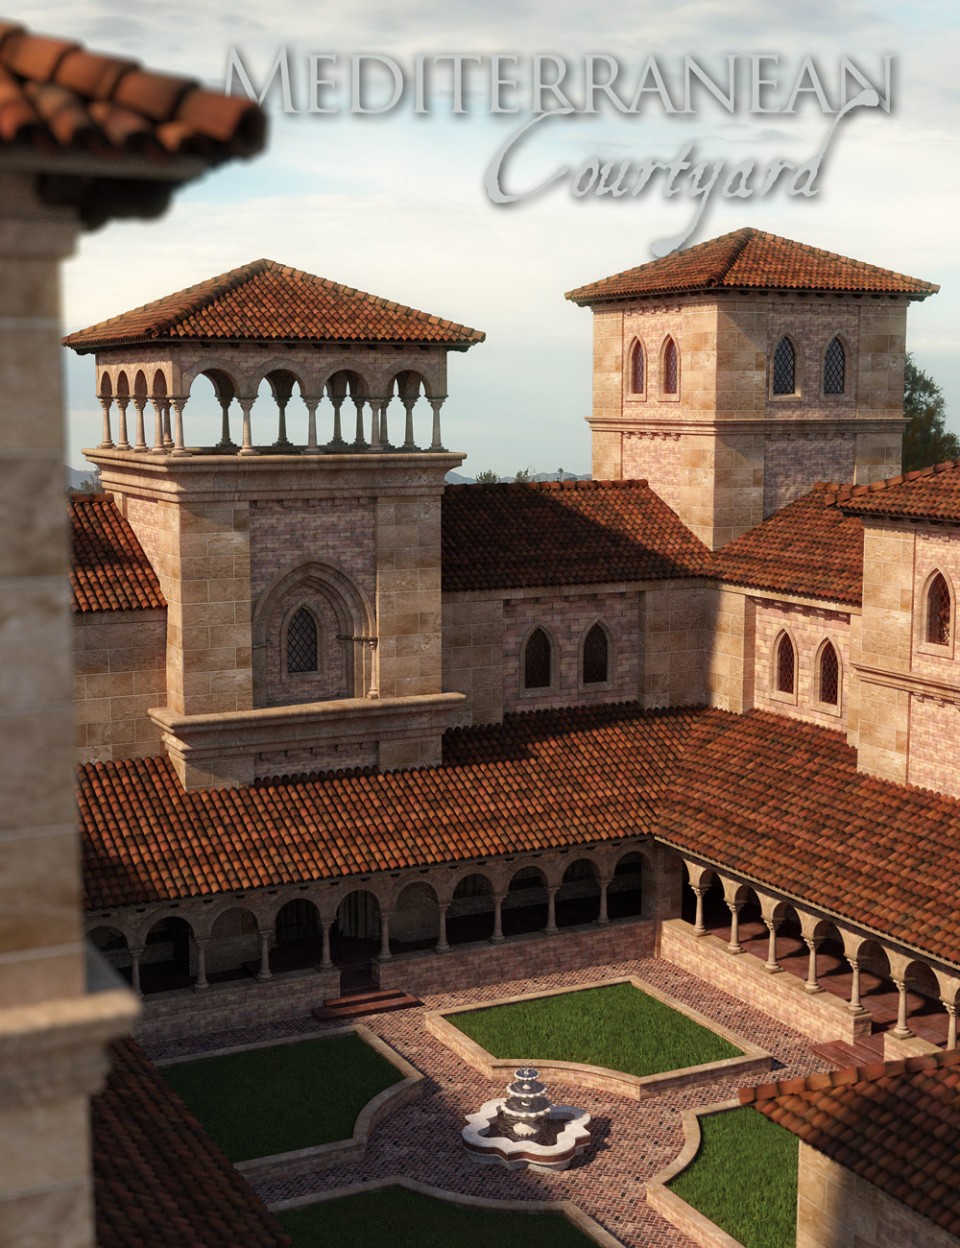 Mediterranean Courtyard and Towers_DAZ3DDL